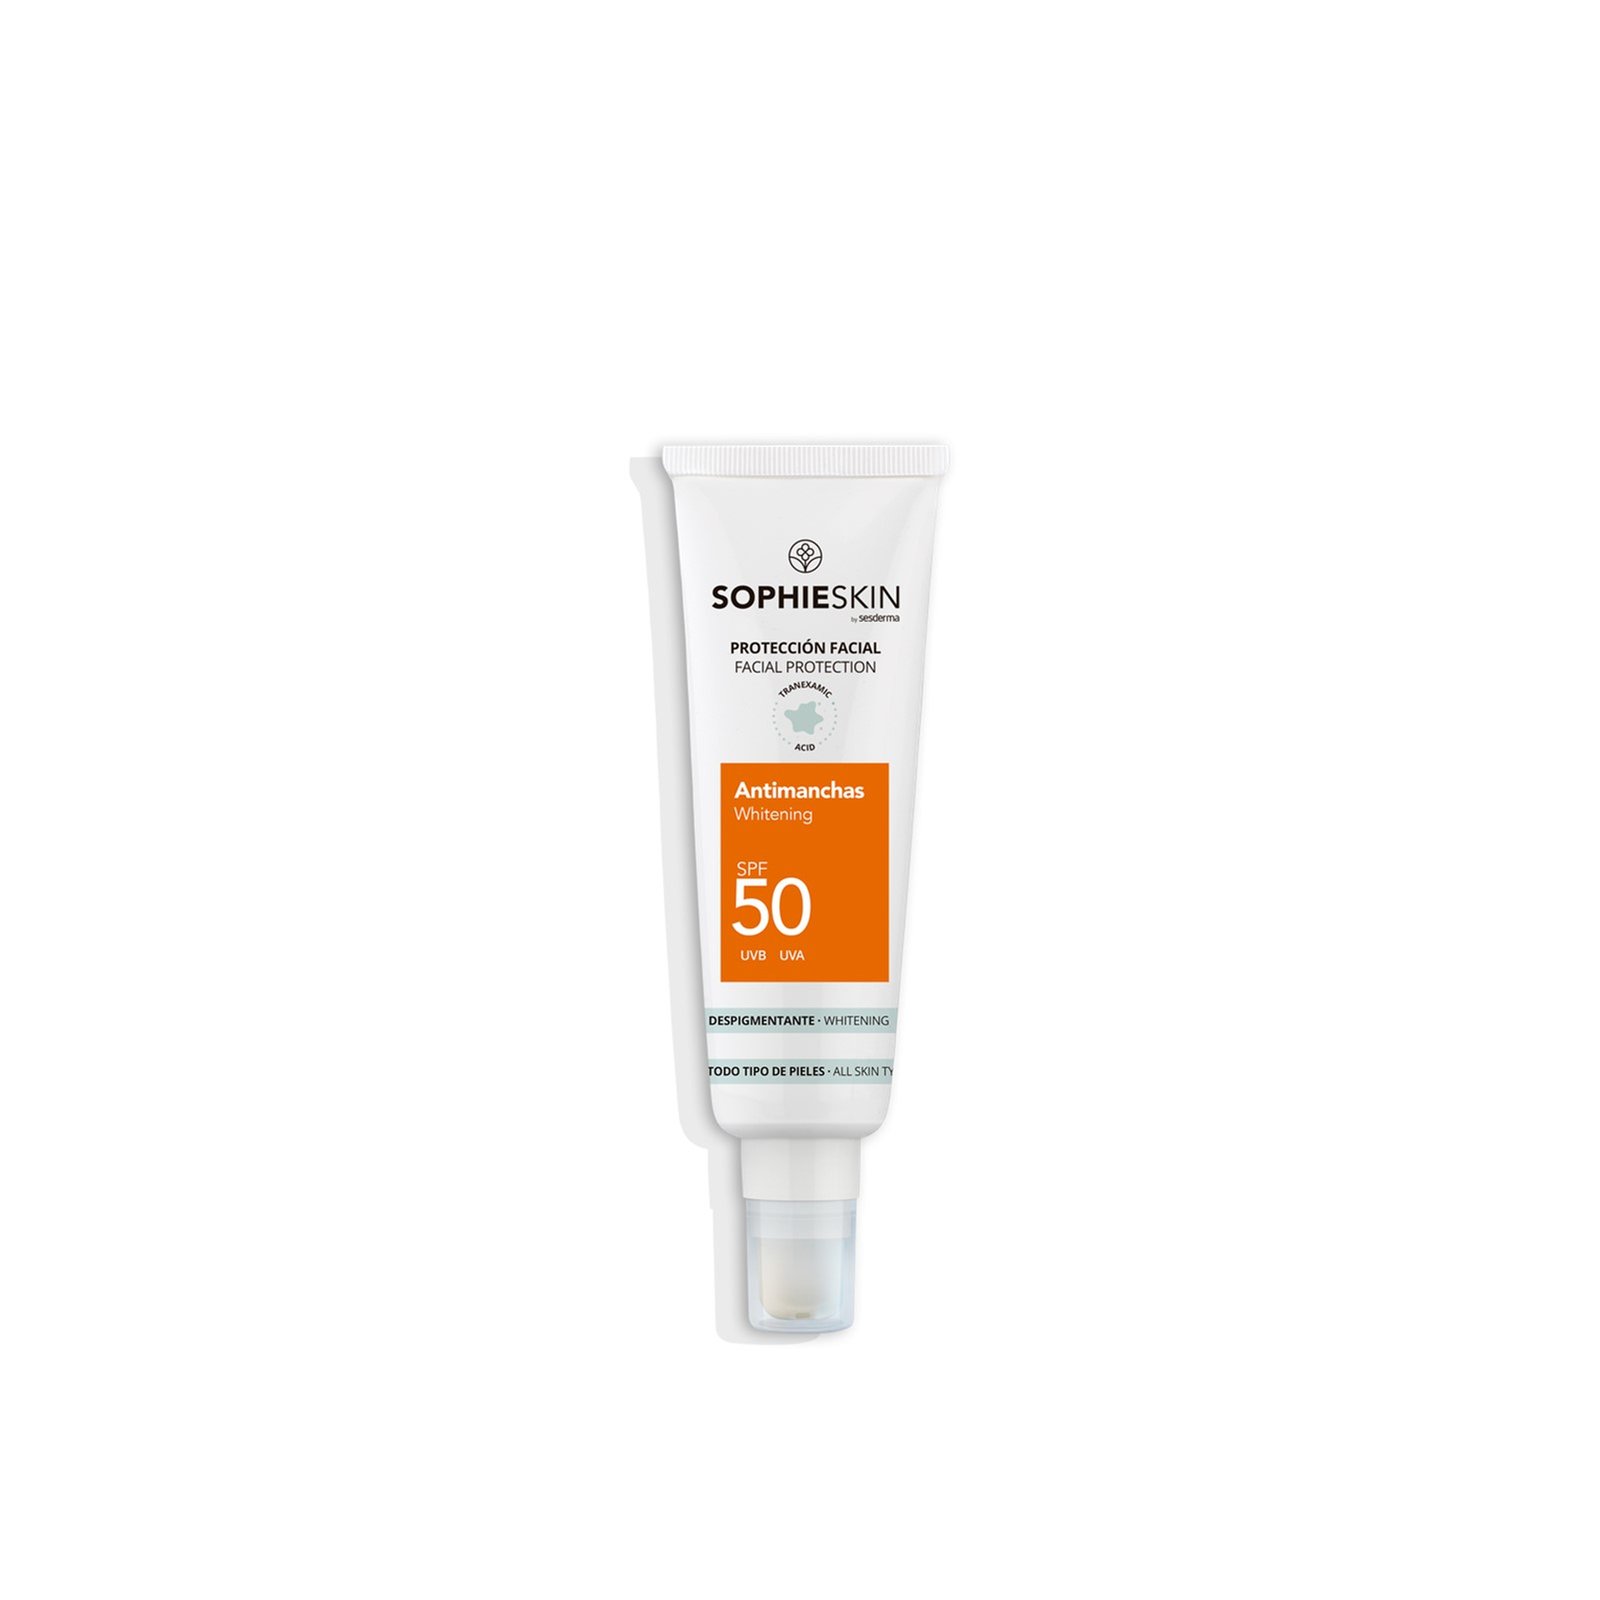 Sophieskin Whitening Facial Protection Sunscreen SPF50 50ml